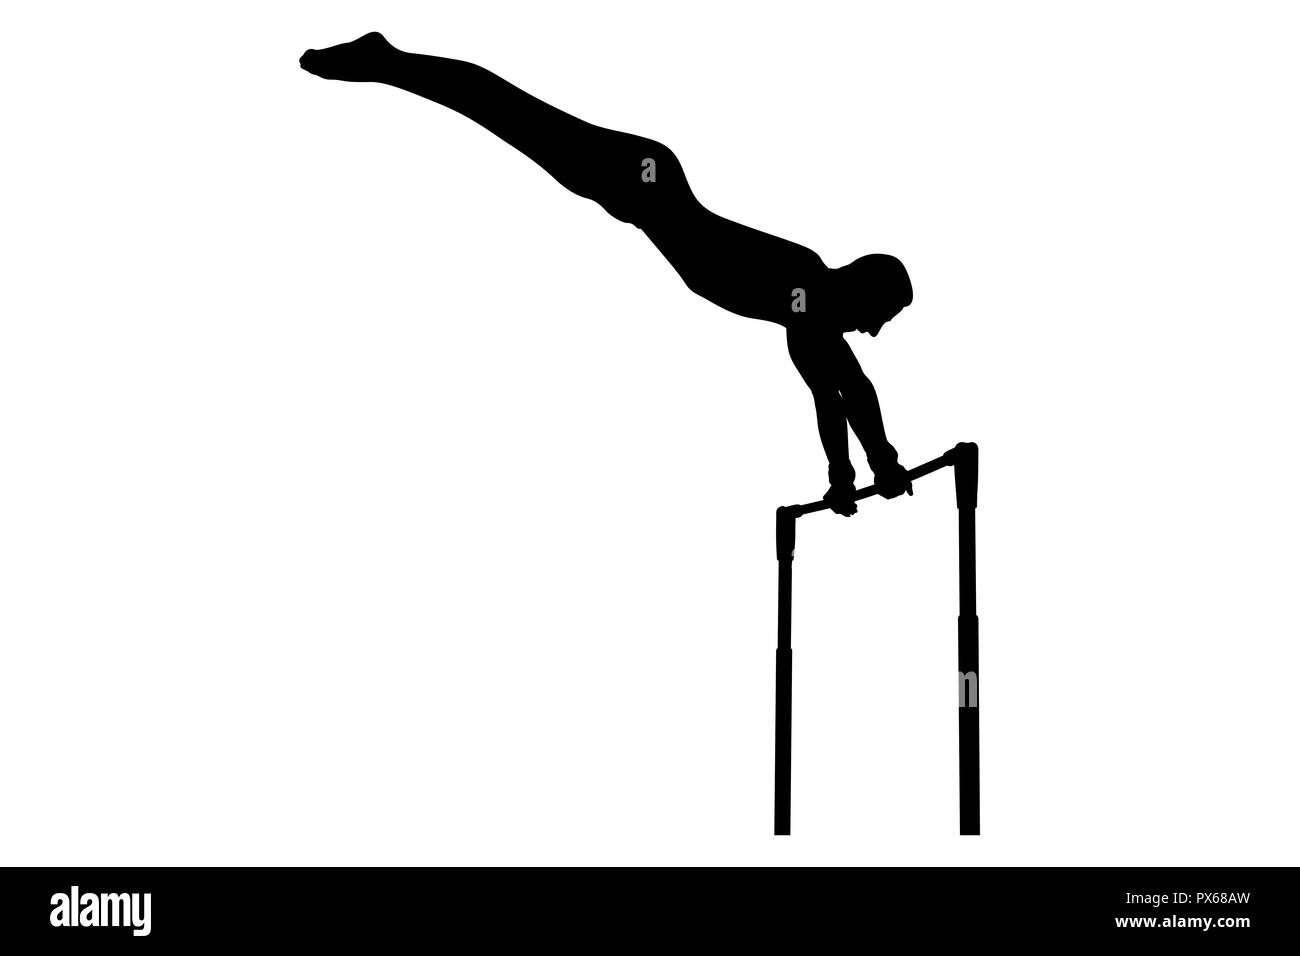 horizontal bar gymnast in artistic gymnastics black silhouette Stock Photo